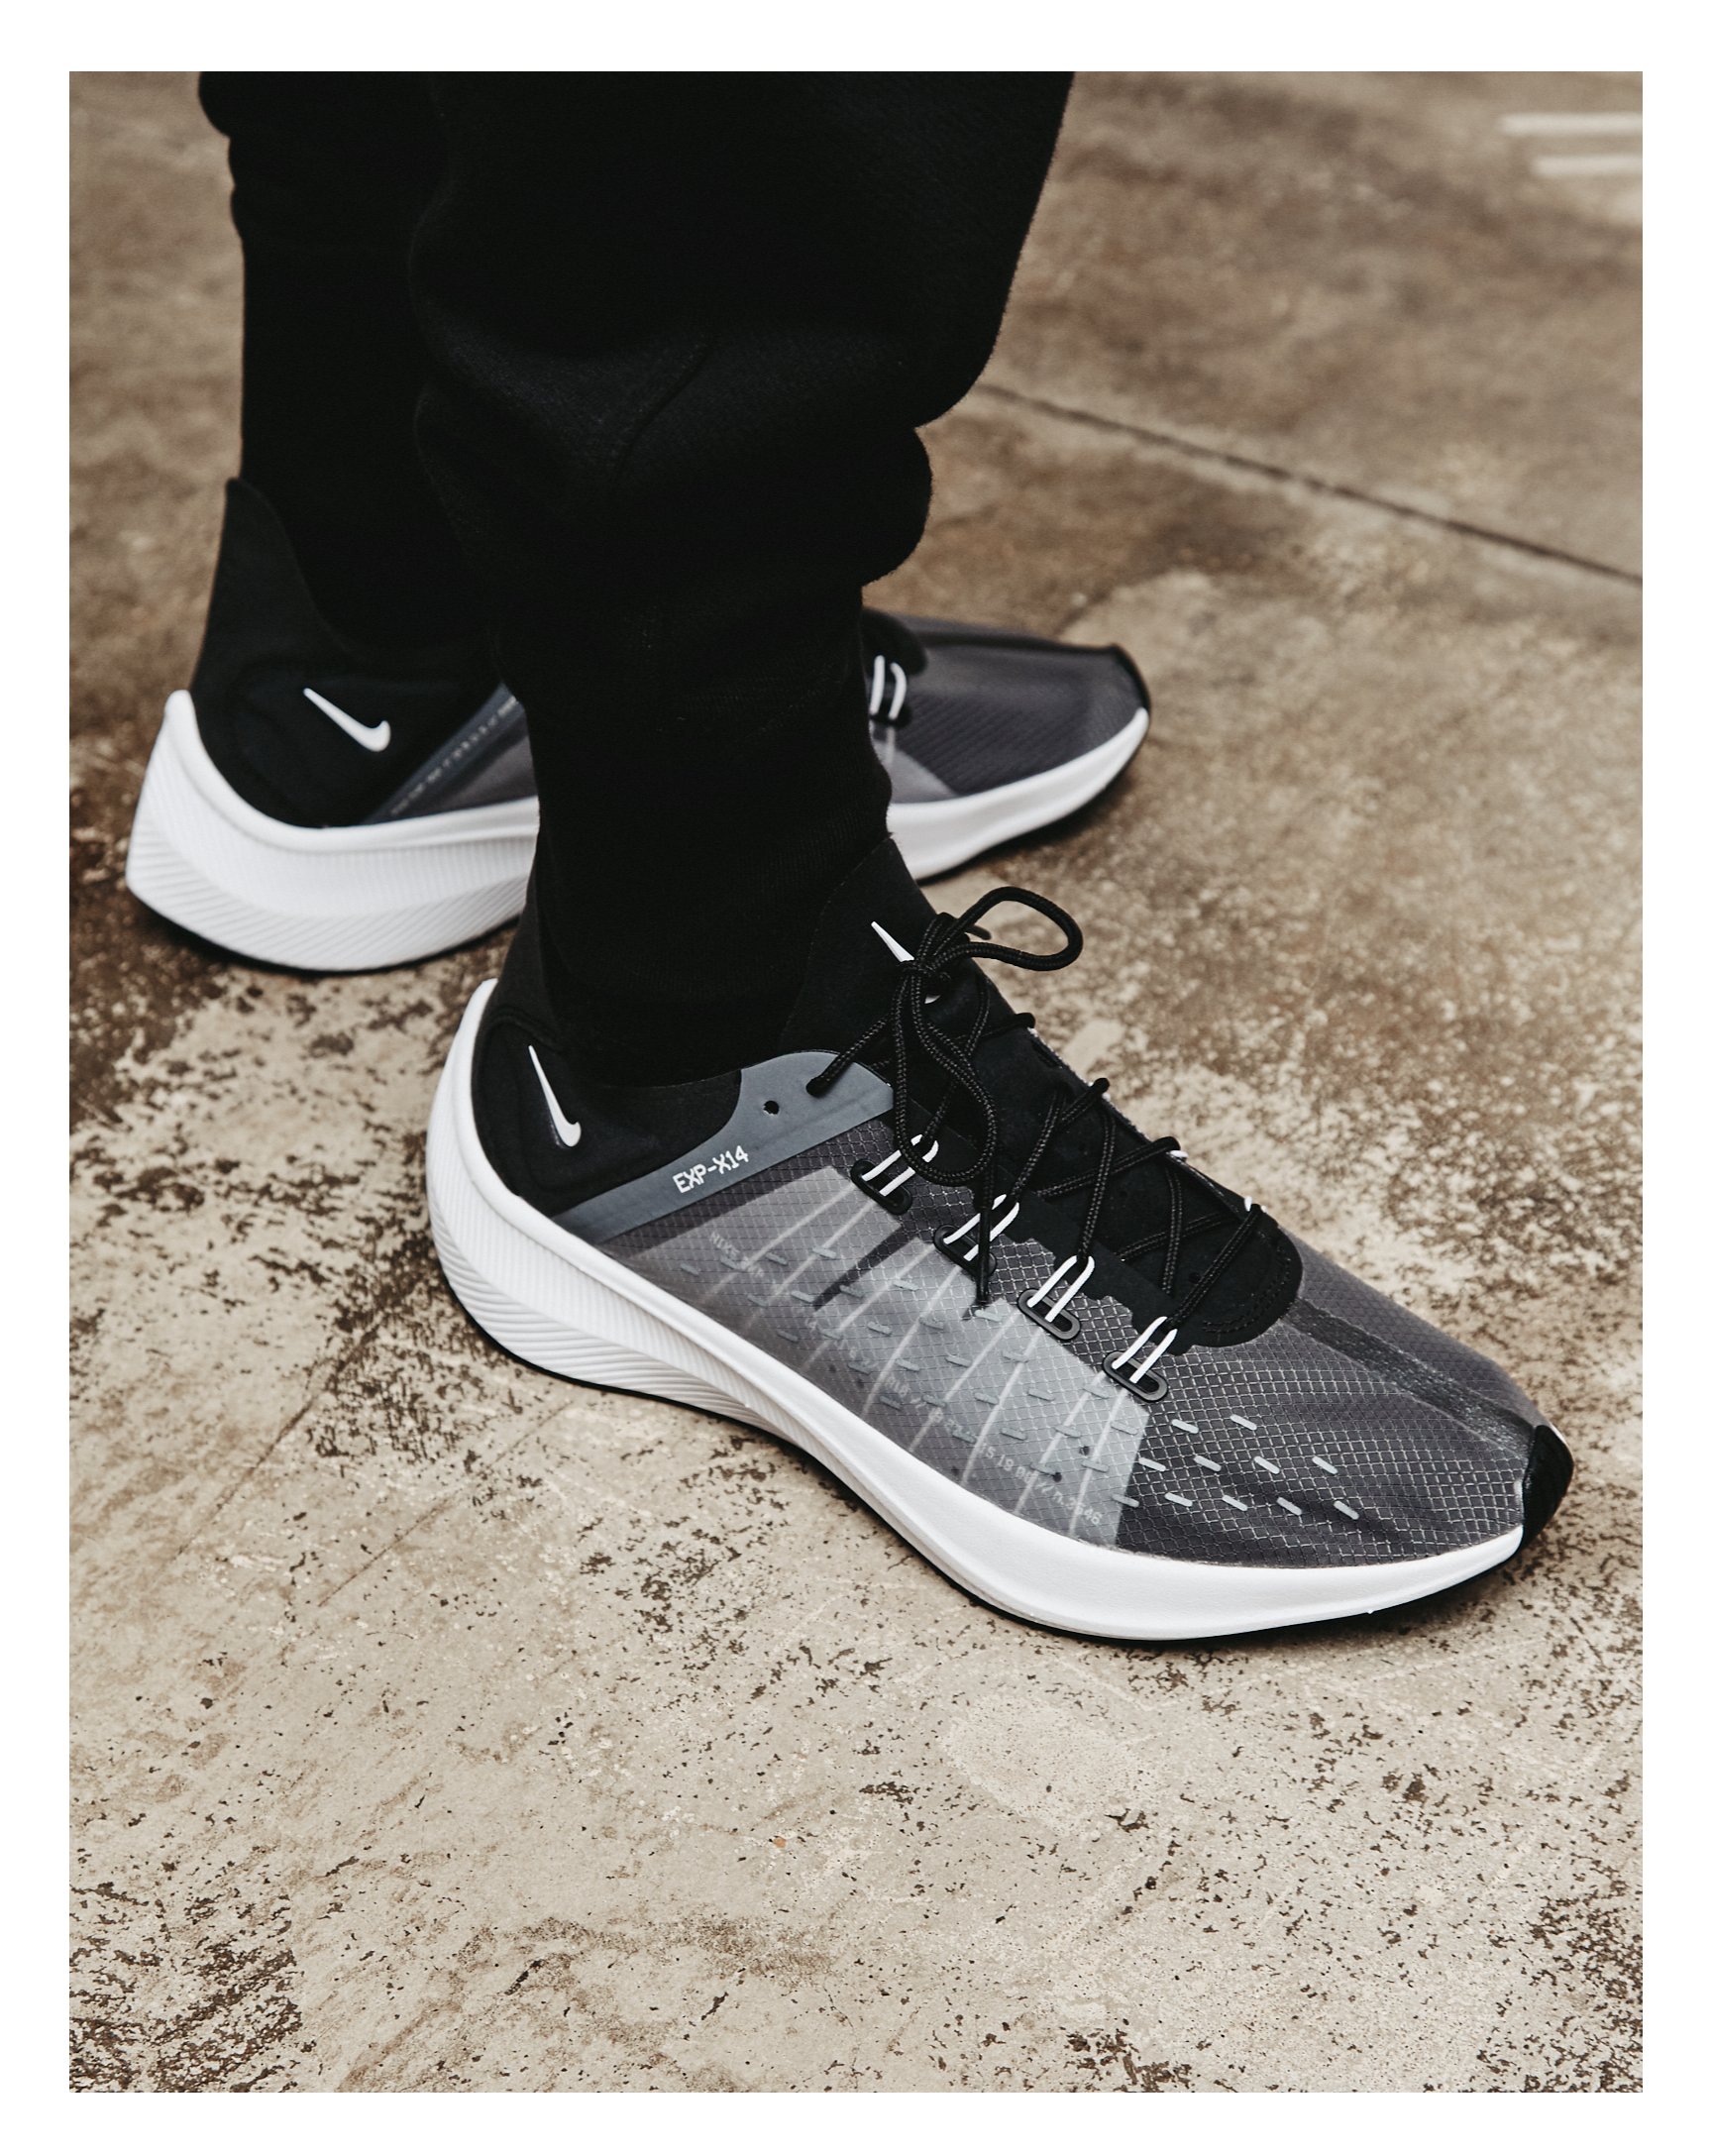 טוויטר \ SOLELINKS בטוויטר: "Nike EXP-X14 'Black/Dark Grey' is available Need https://t.co/bGIMGP9KaW https://t.co/7X1511voRh"